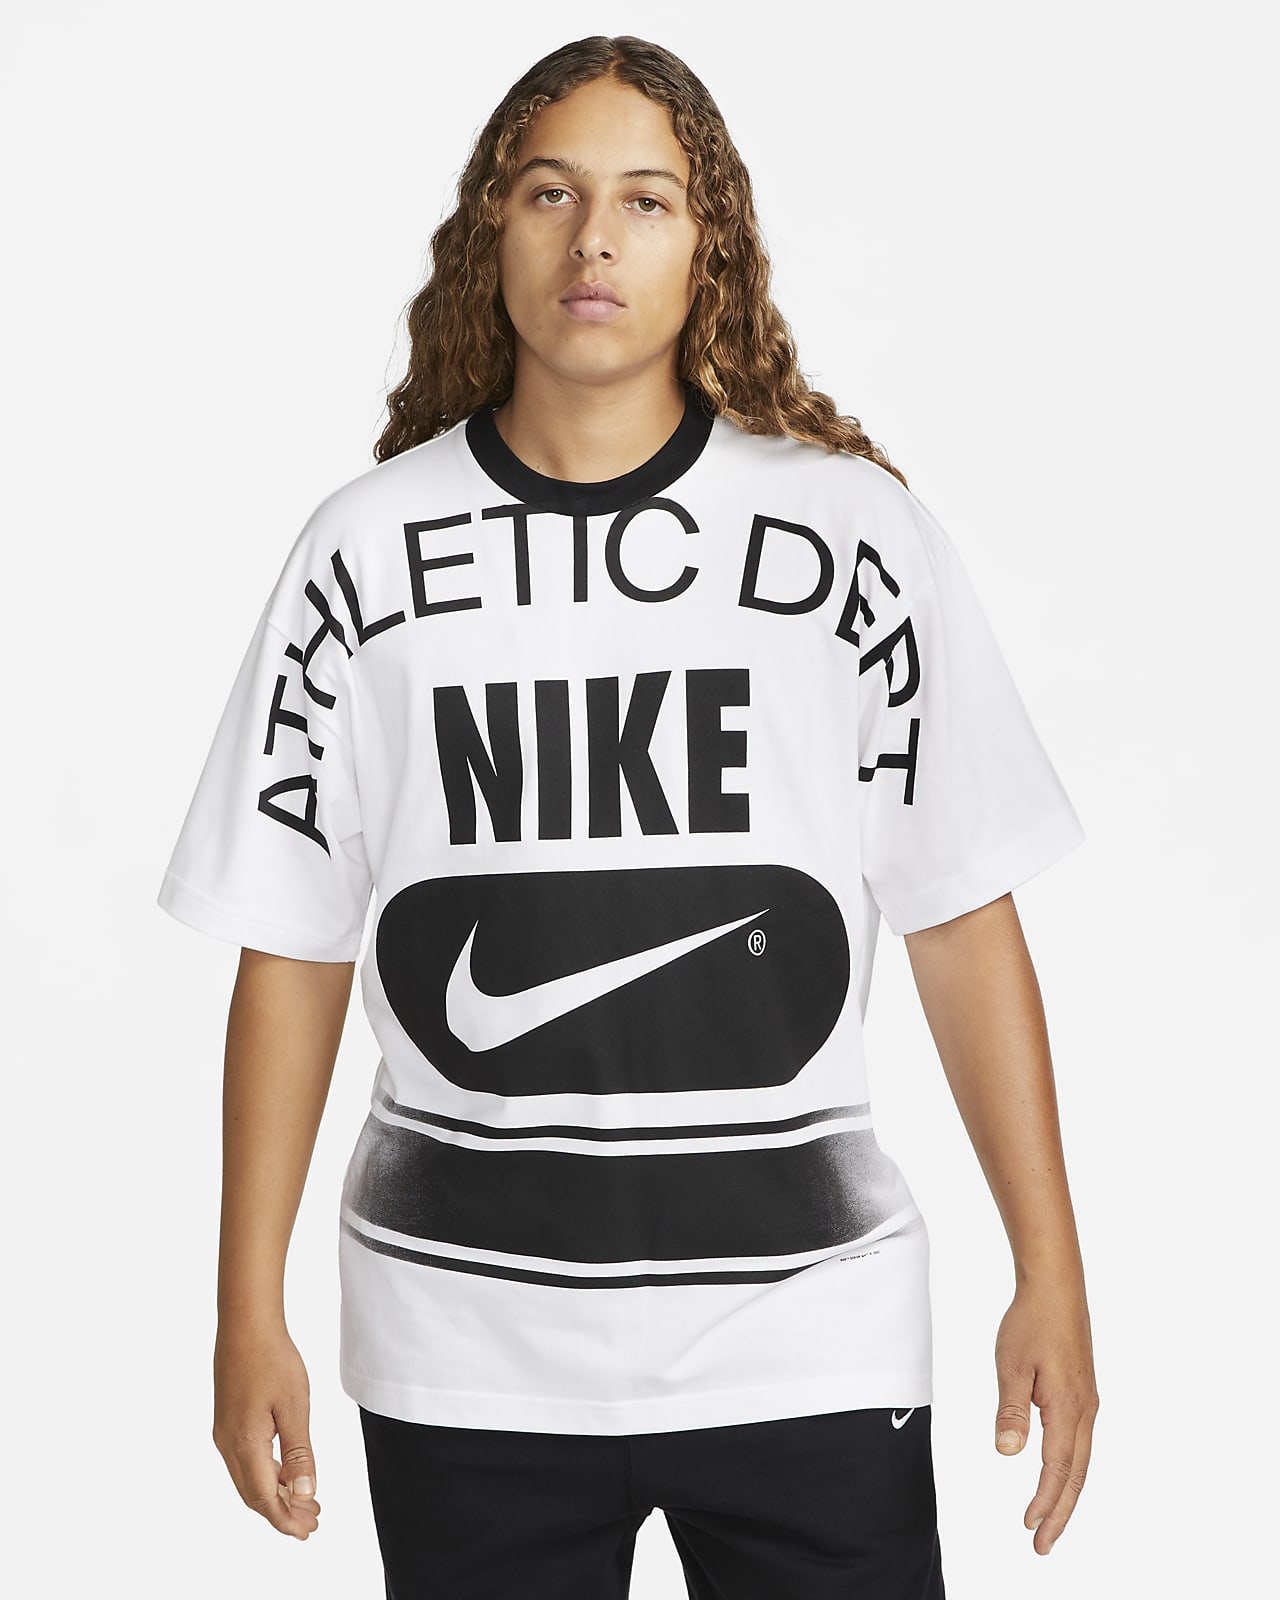 Escrutinio Navidad Rebaja Nike Camiseta. Nike ES